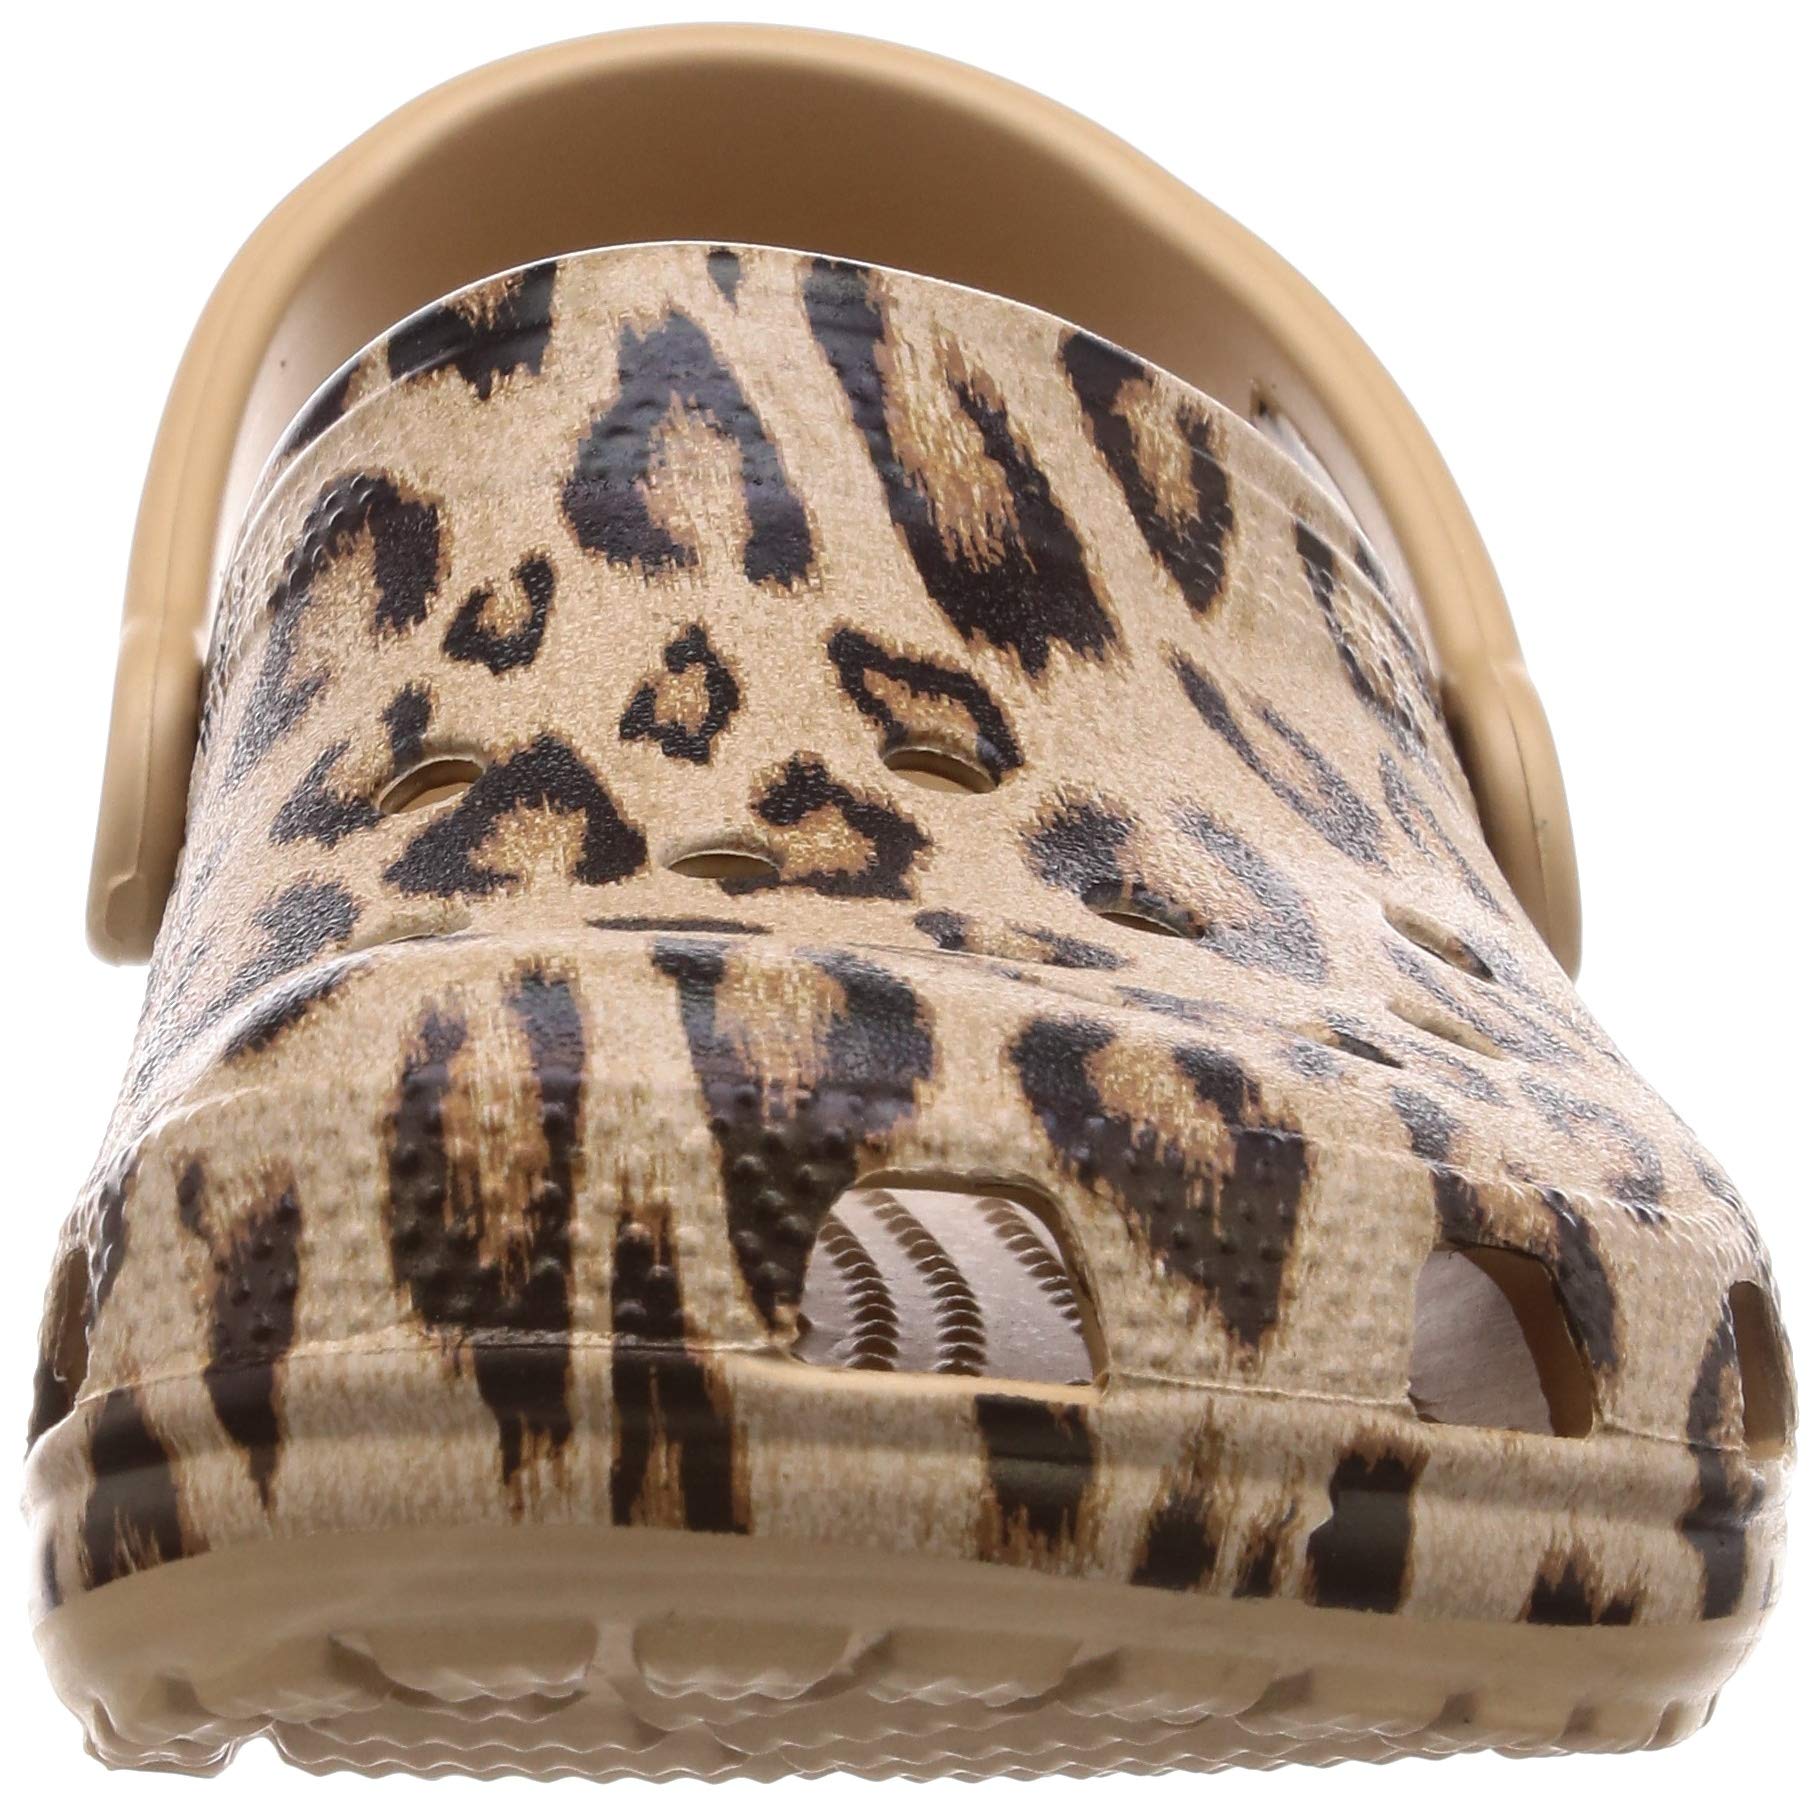 Crocs Women's Men's Classic Animal Print Clog | Zebra and Leopard Shoes